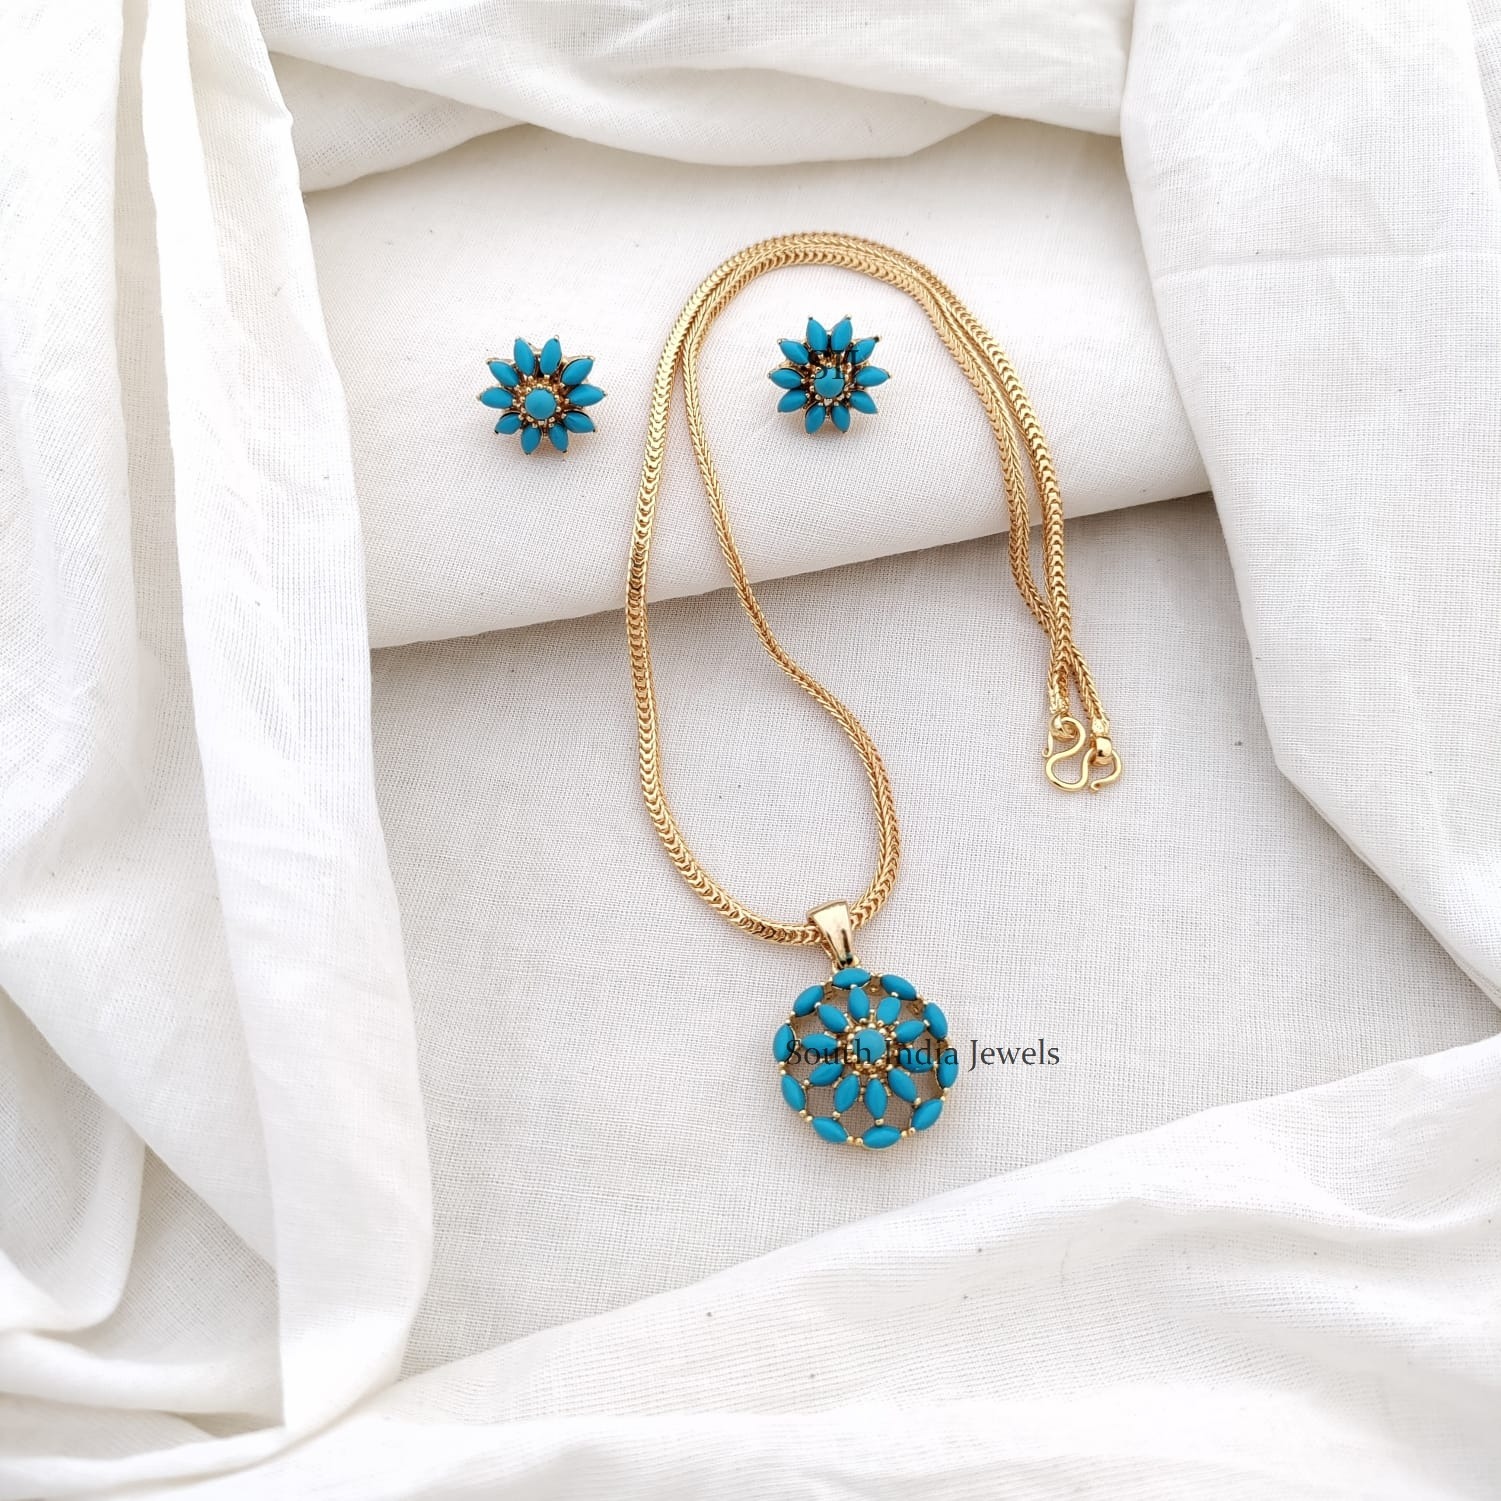 Stunning Turquoise Blue Pendant Necklace